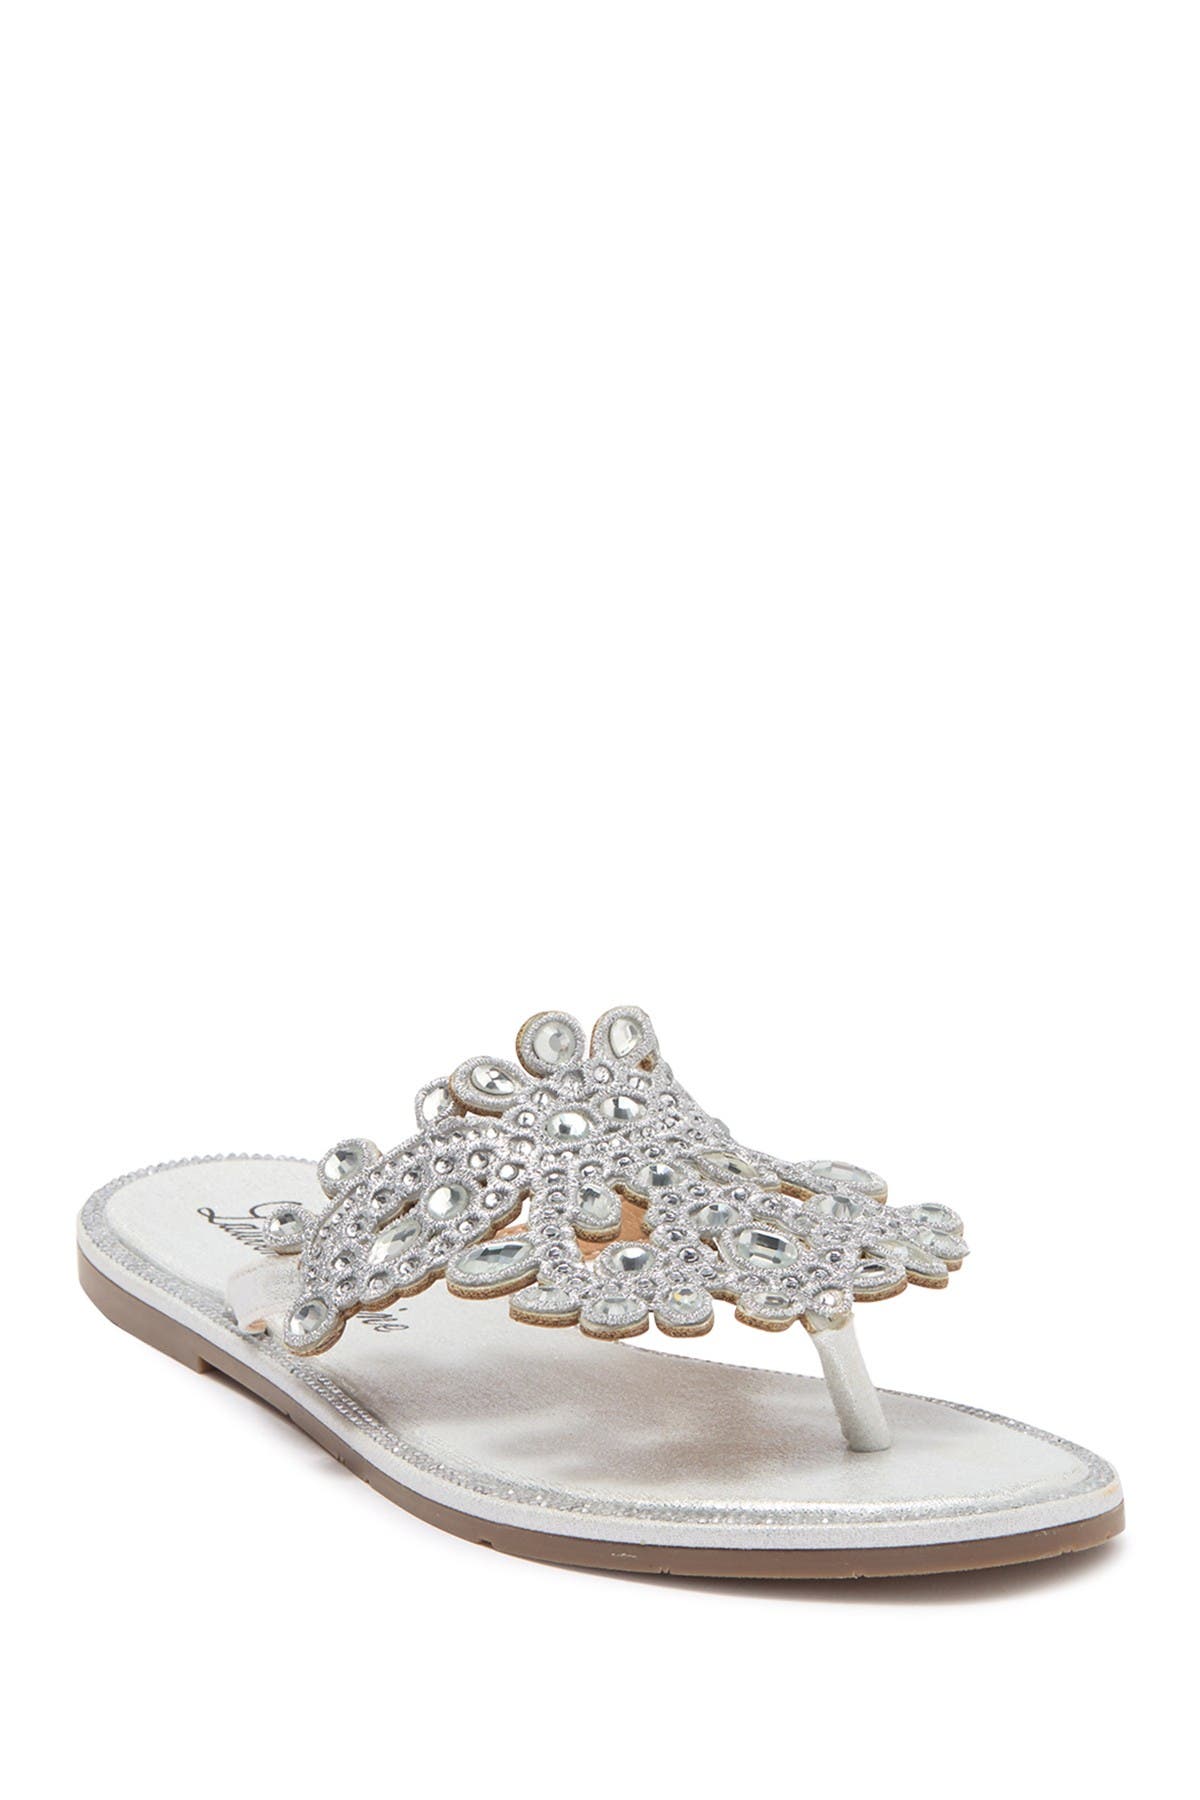 Lauren Lorraine St. Tropez Flat Crystal Sandals In Silver5